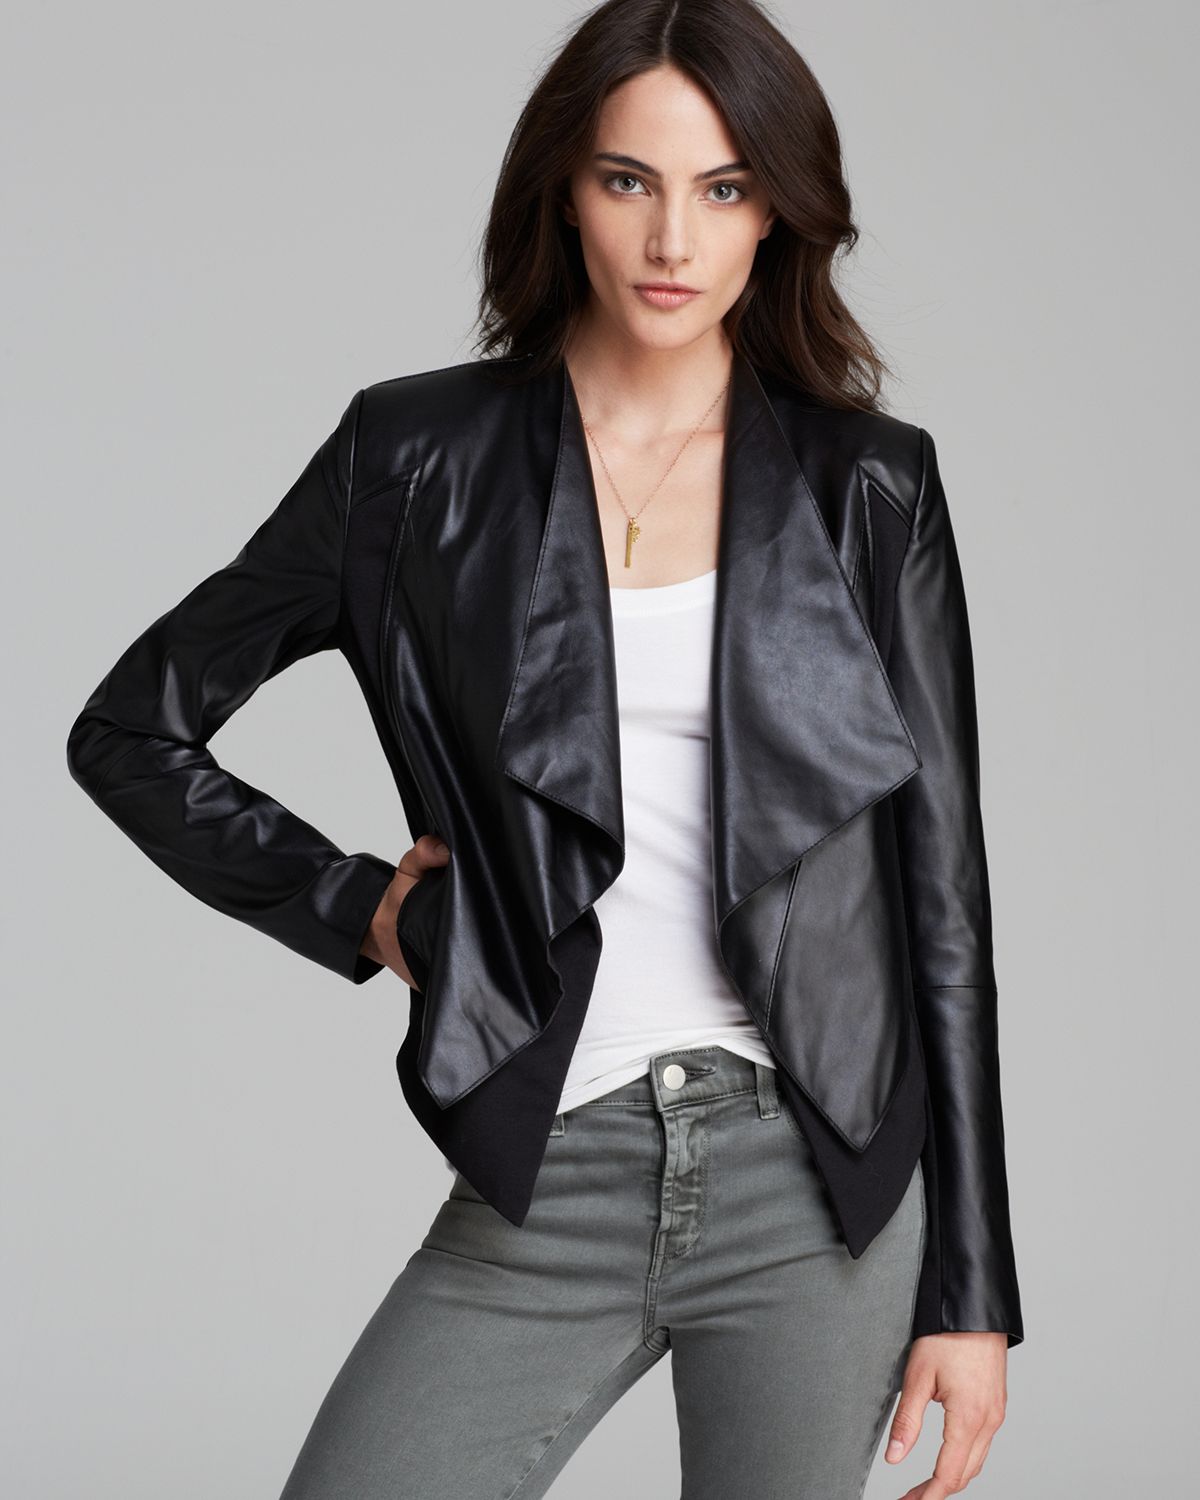 Lyst - Bagatelle Faux Leather Open Front Jacket in Black